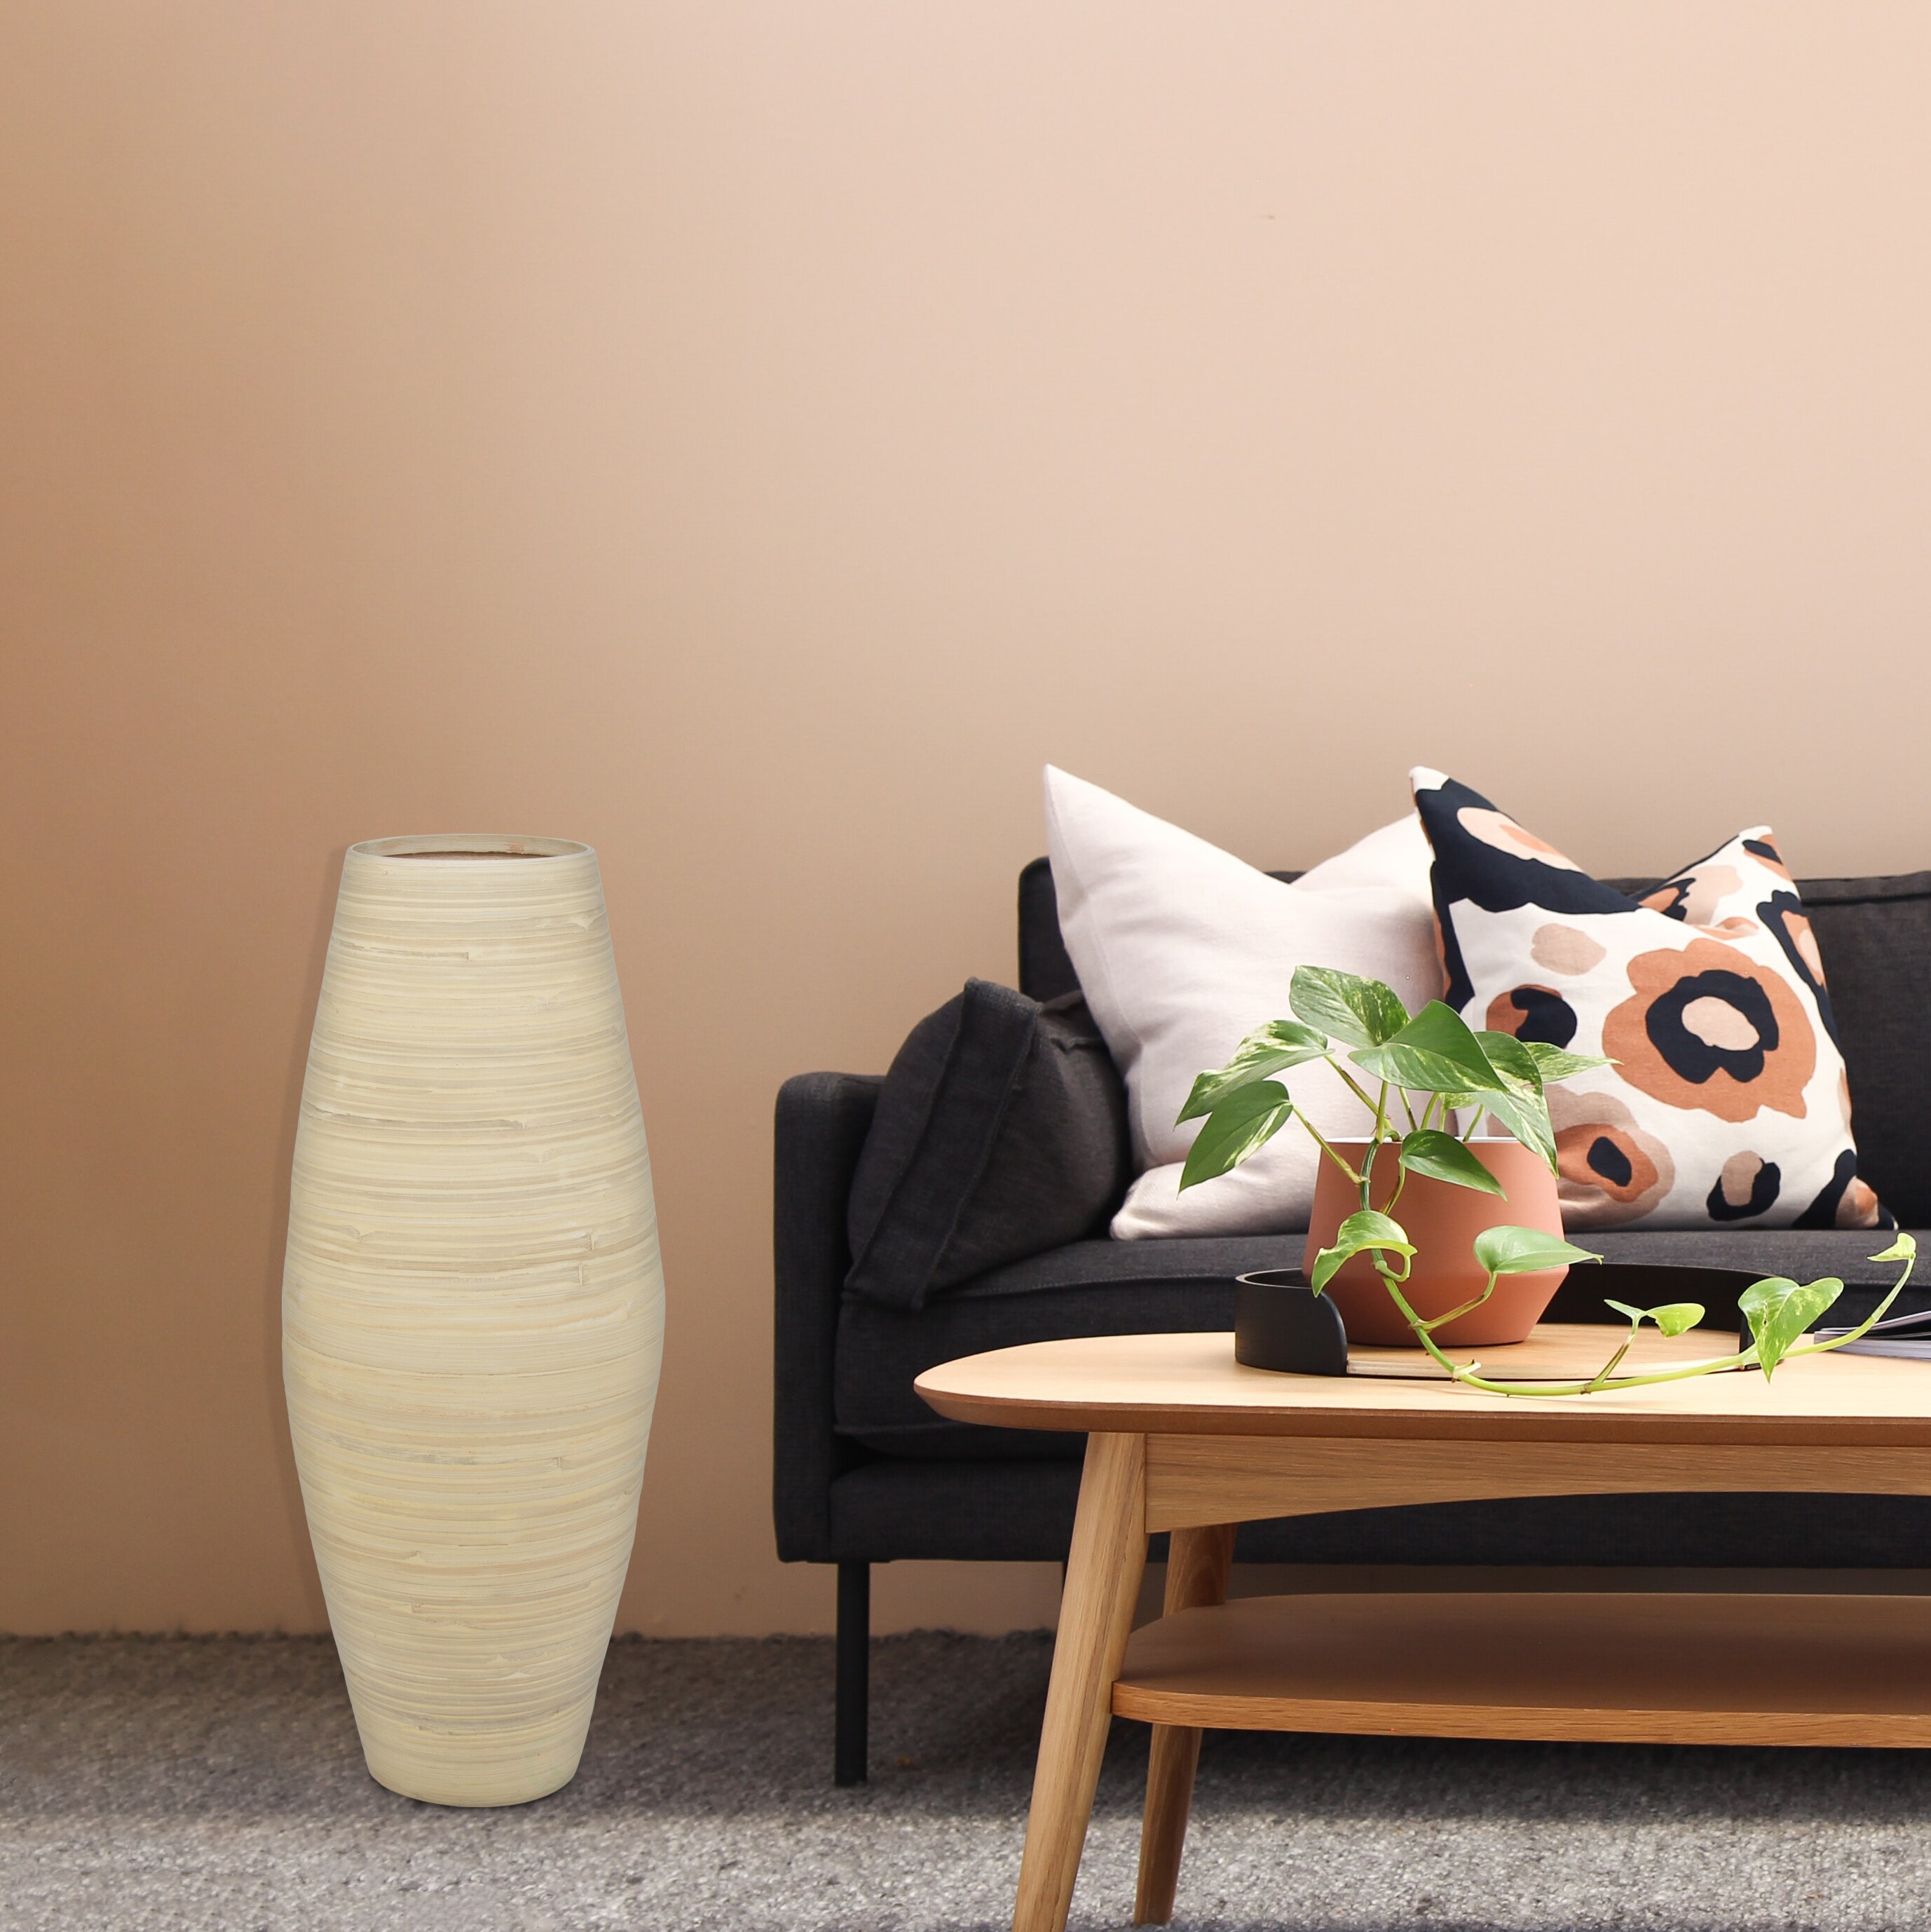 Uniquewise Modern Brown Textured Design Floor Flower Vase, for